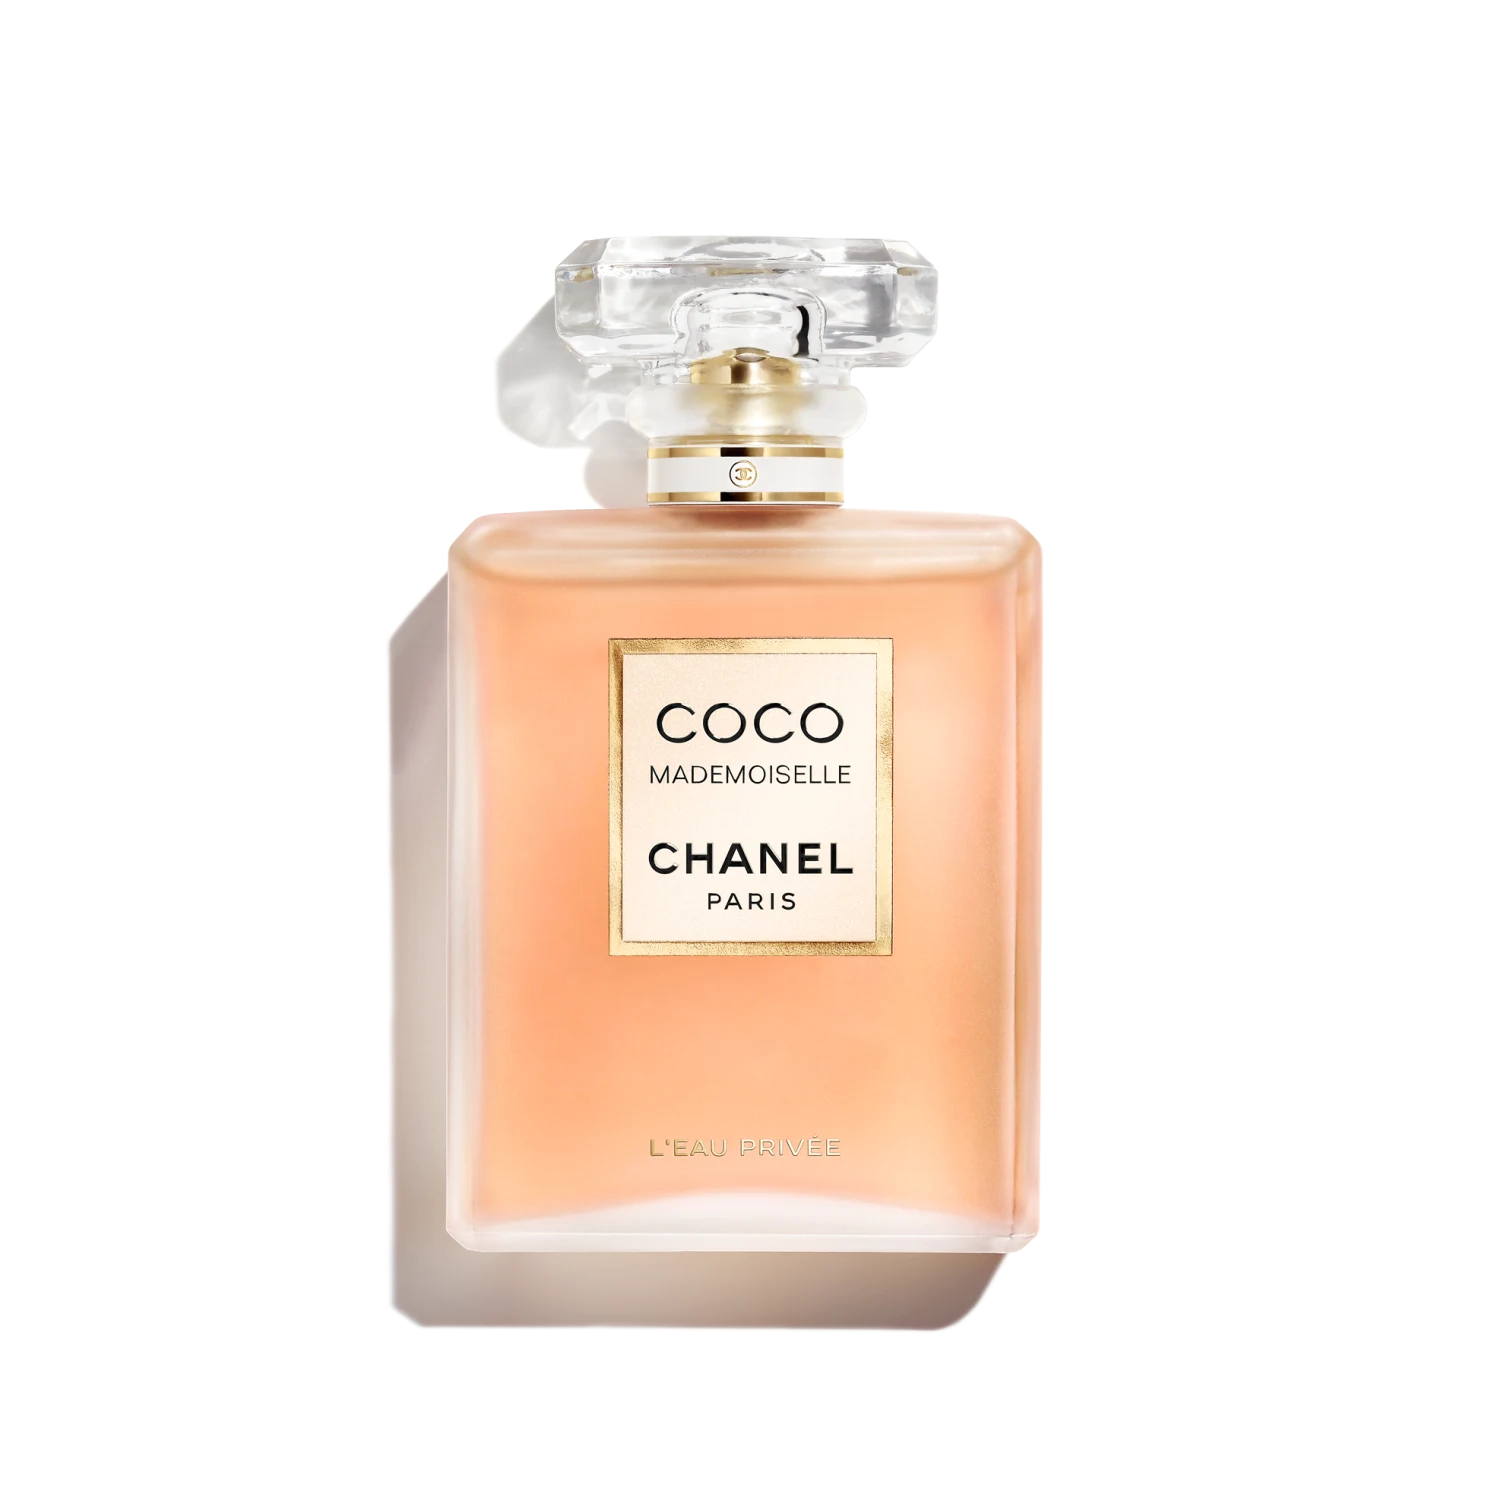 Вода парфюмерная Chanel Coco Mademoiselle L'Eau Privee женская, 100 мл chanel an intimate life